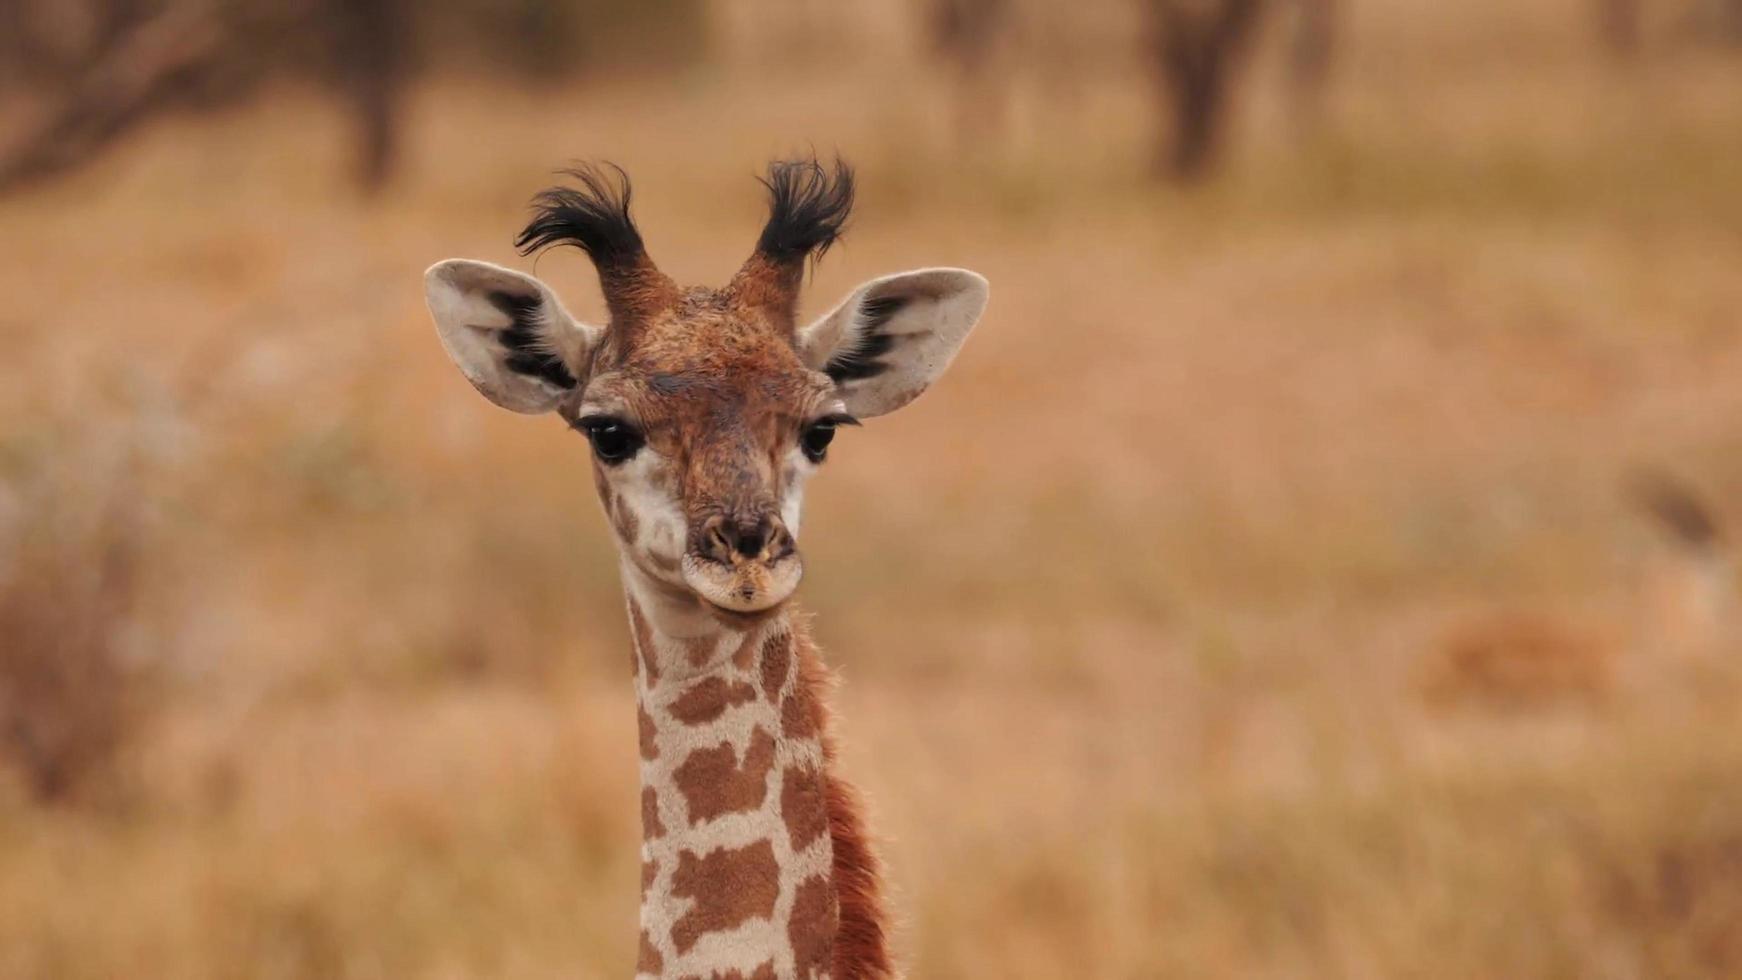 una jirafa africana bebé mirando directamente foto